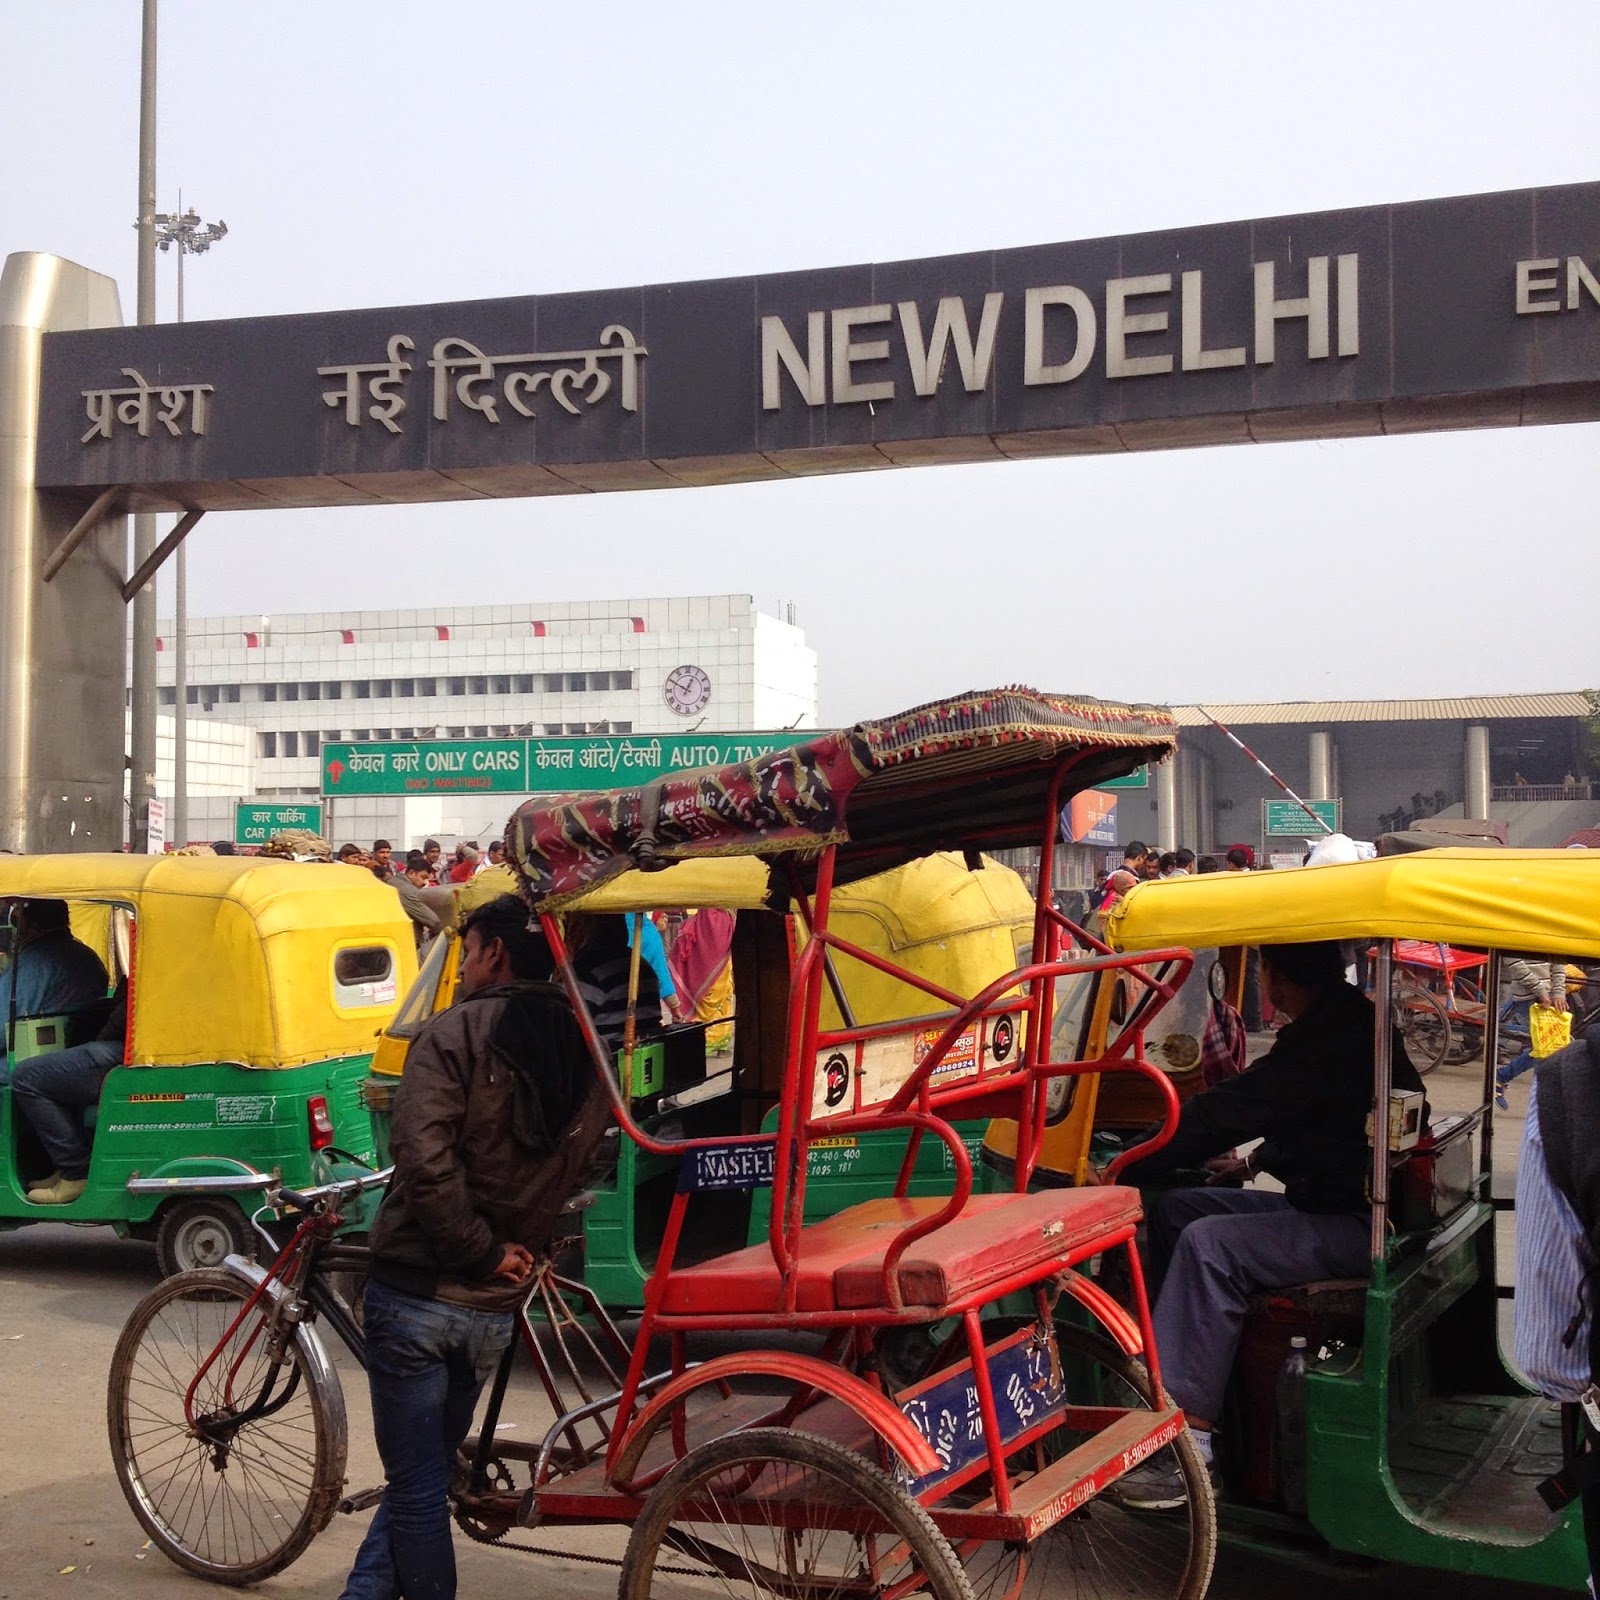 Cycle rickshaw and auto rickshaw in Delhi, India